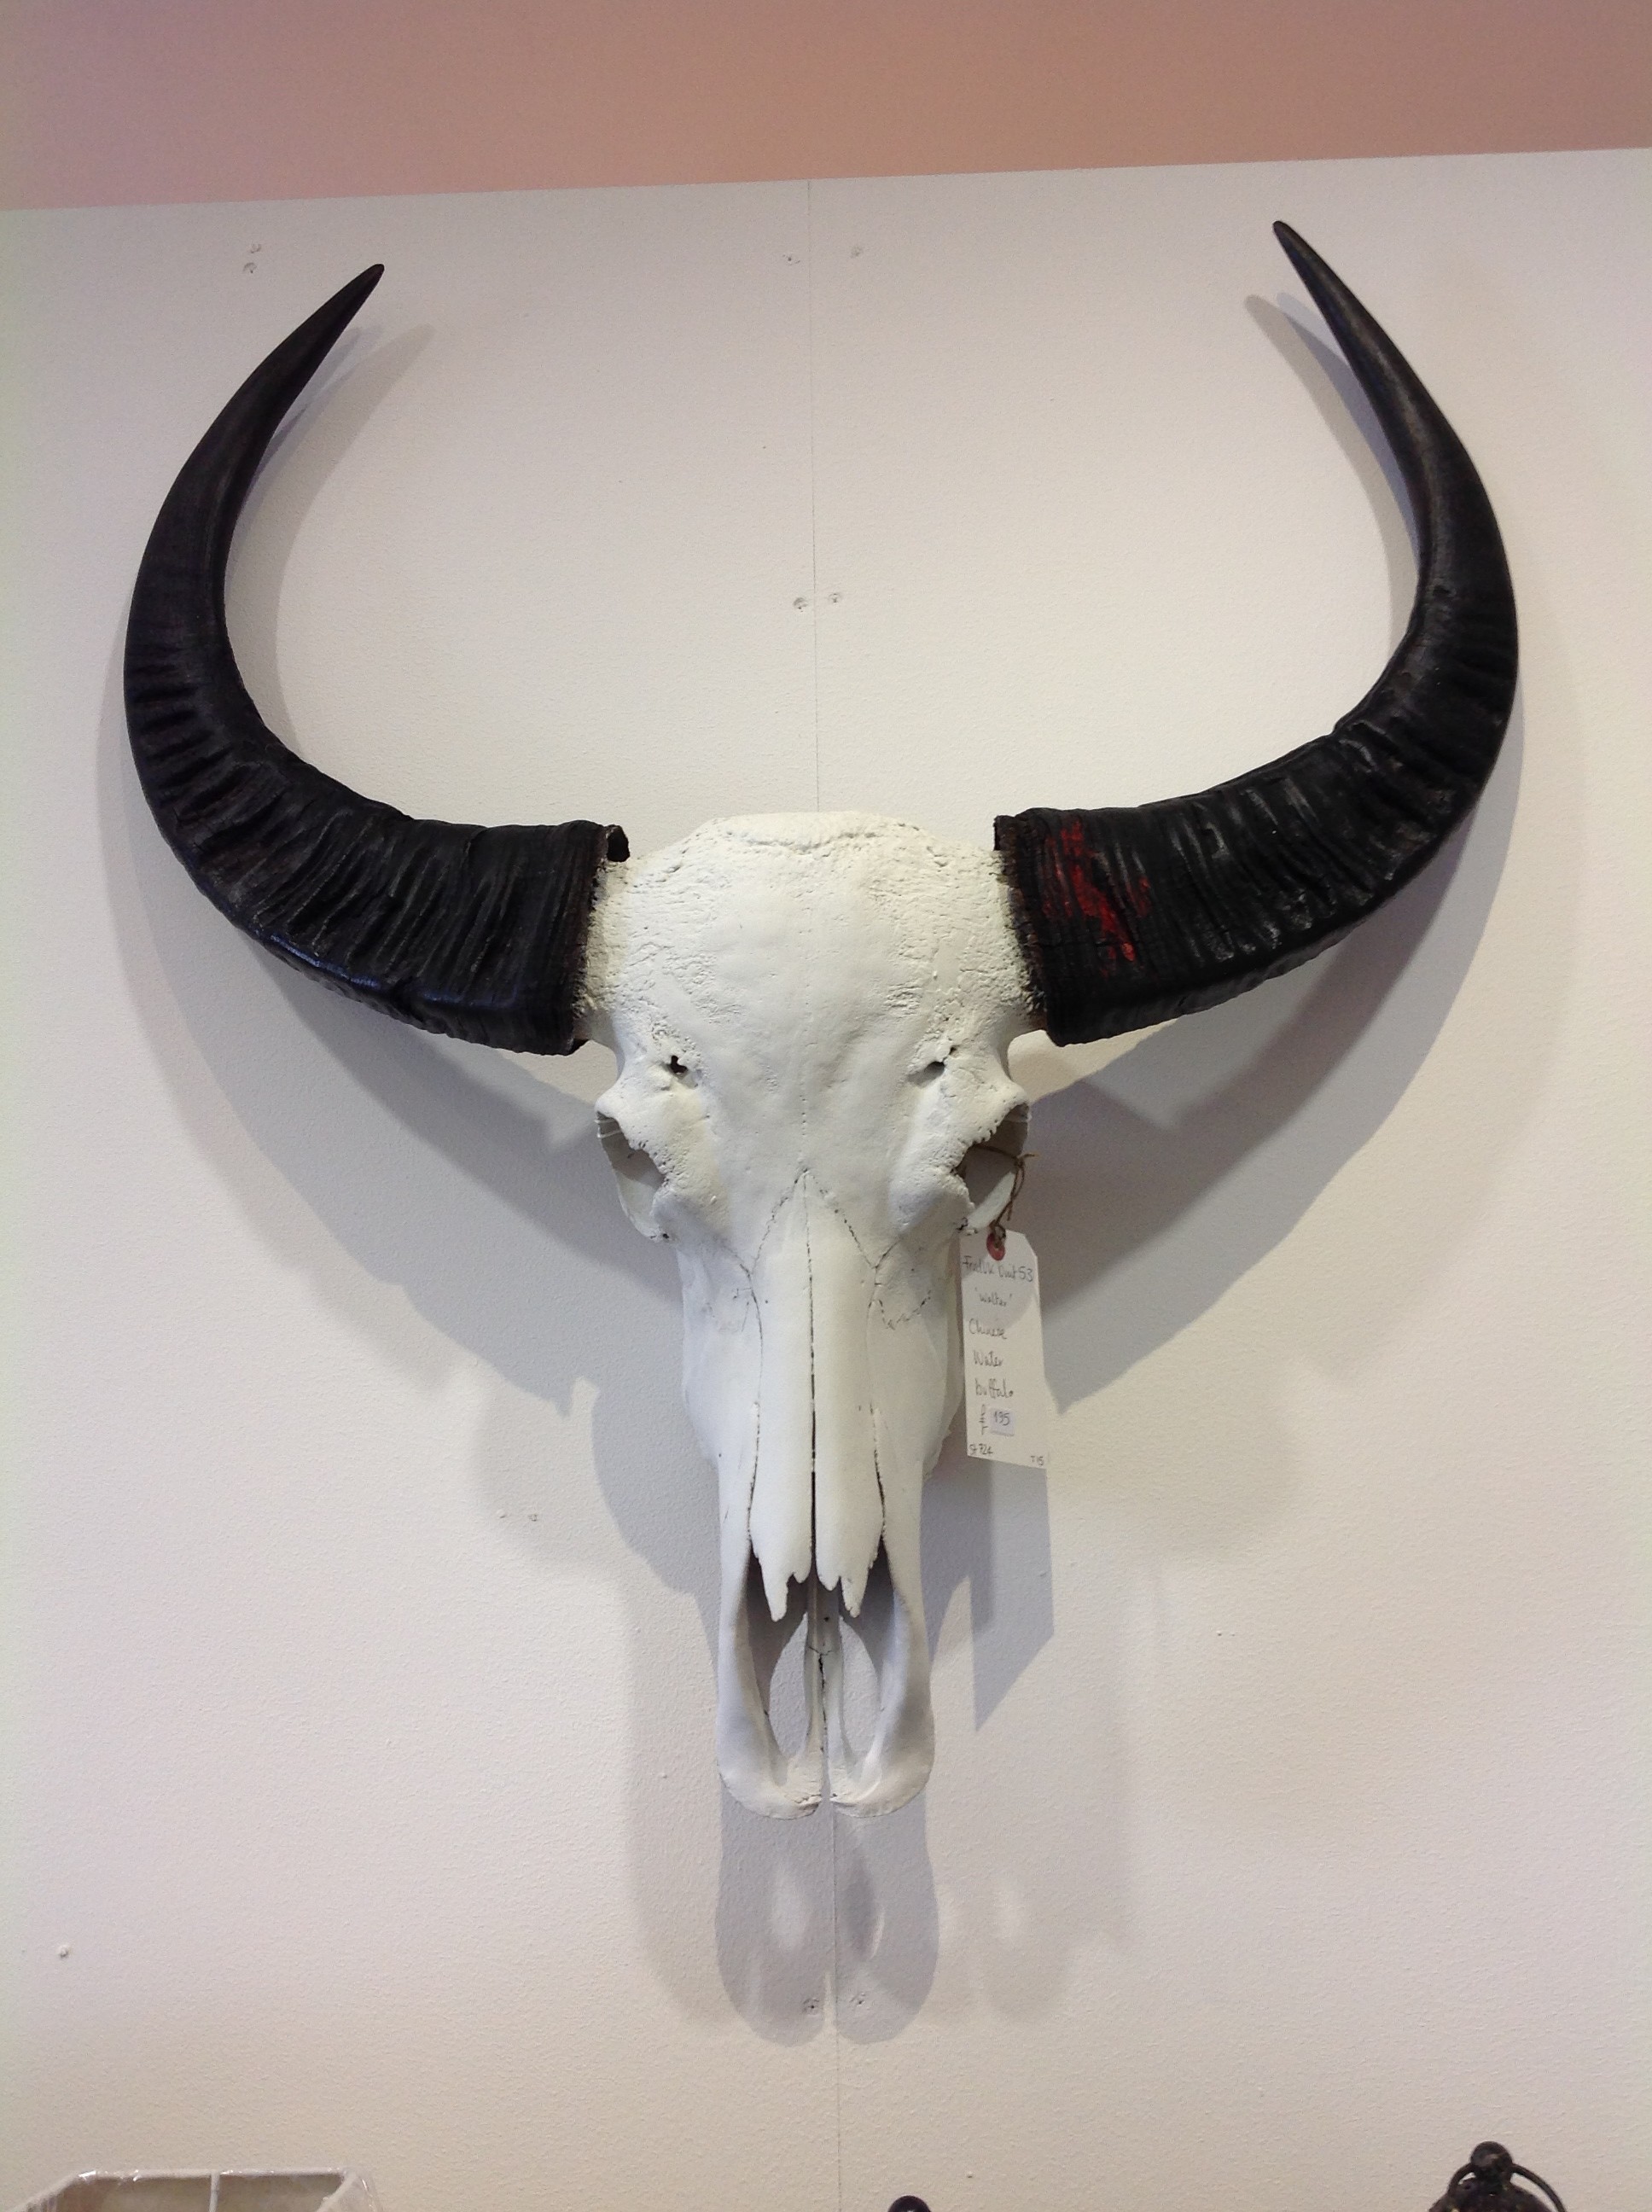 Chinese Water Buffalo Skull, Vintage Interiors